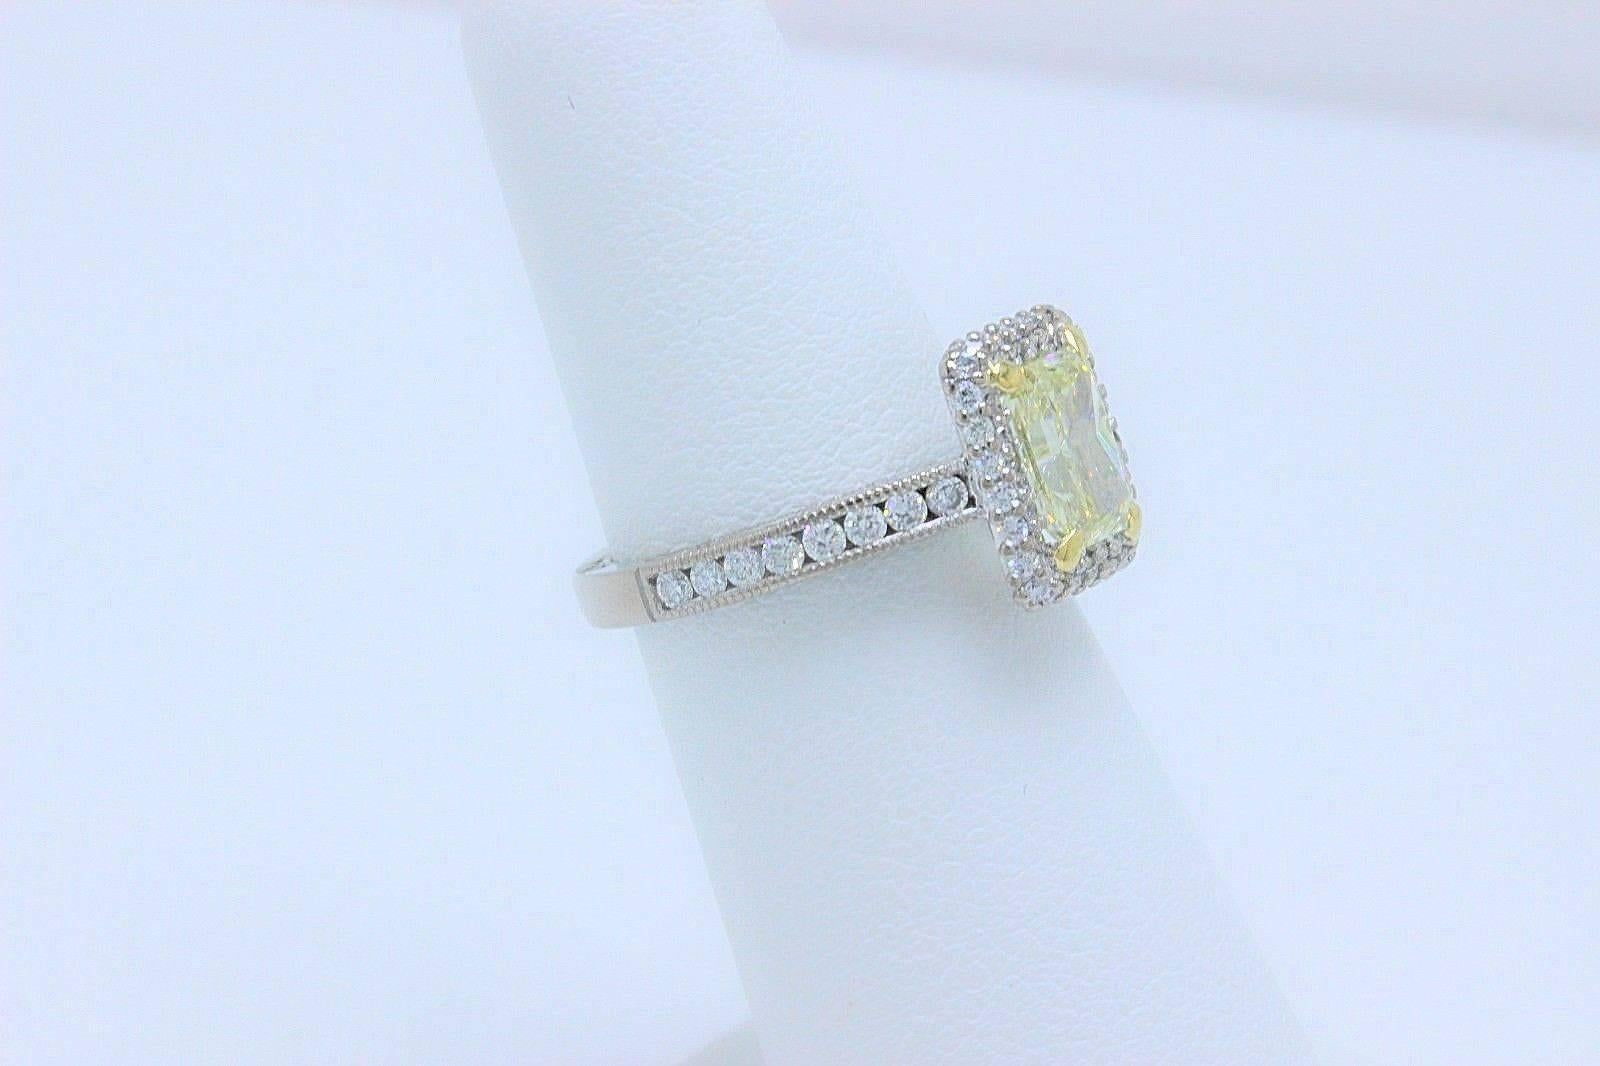 Radiant Cut Tacori Fancy Light Yellow 1.98 TCW Diamond Ring in 18k White & Yellow Gold